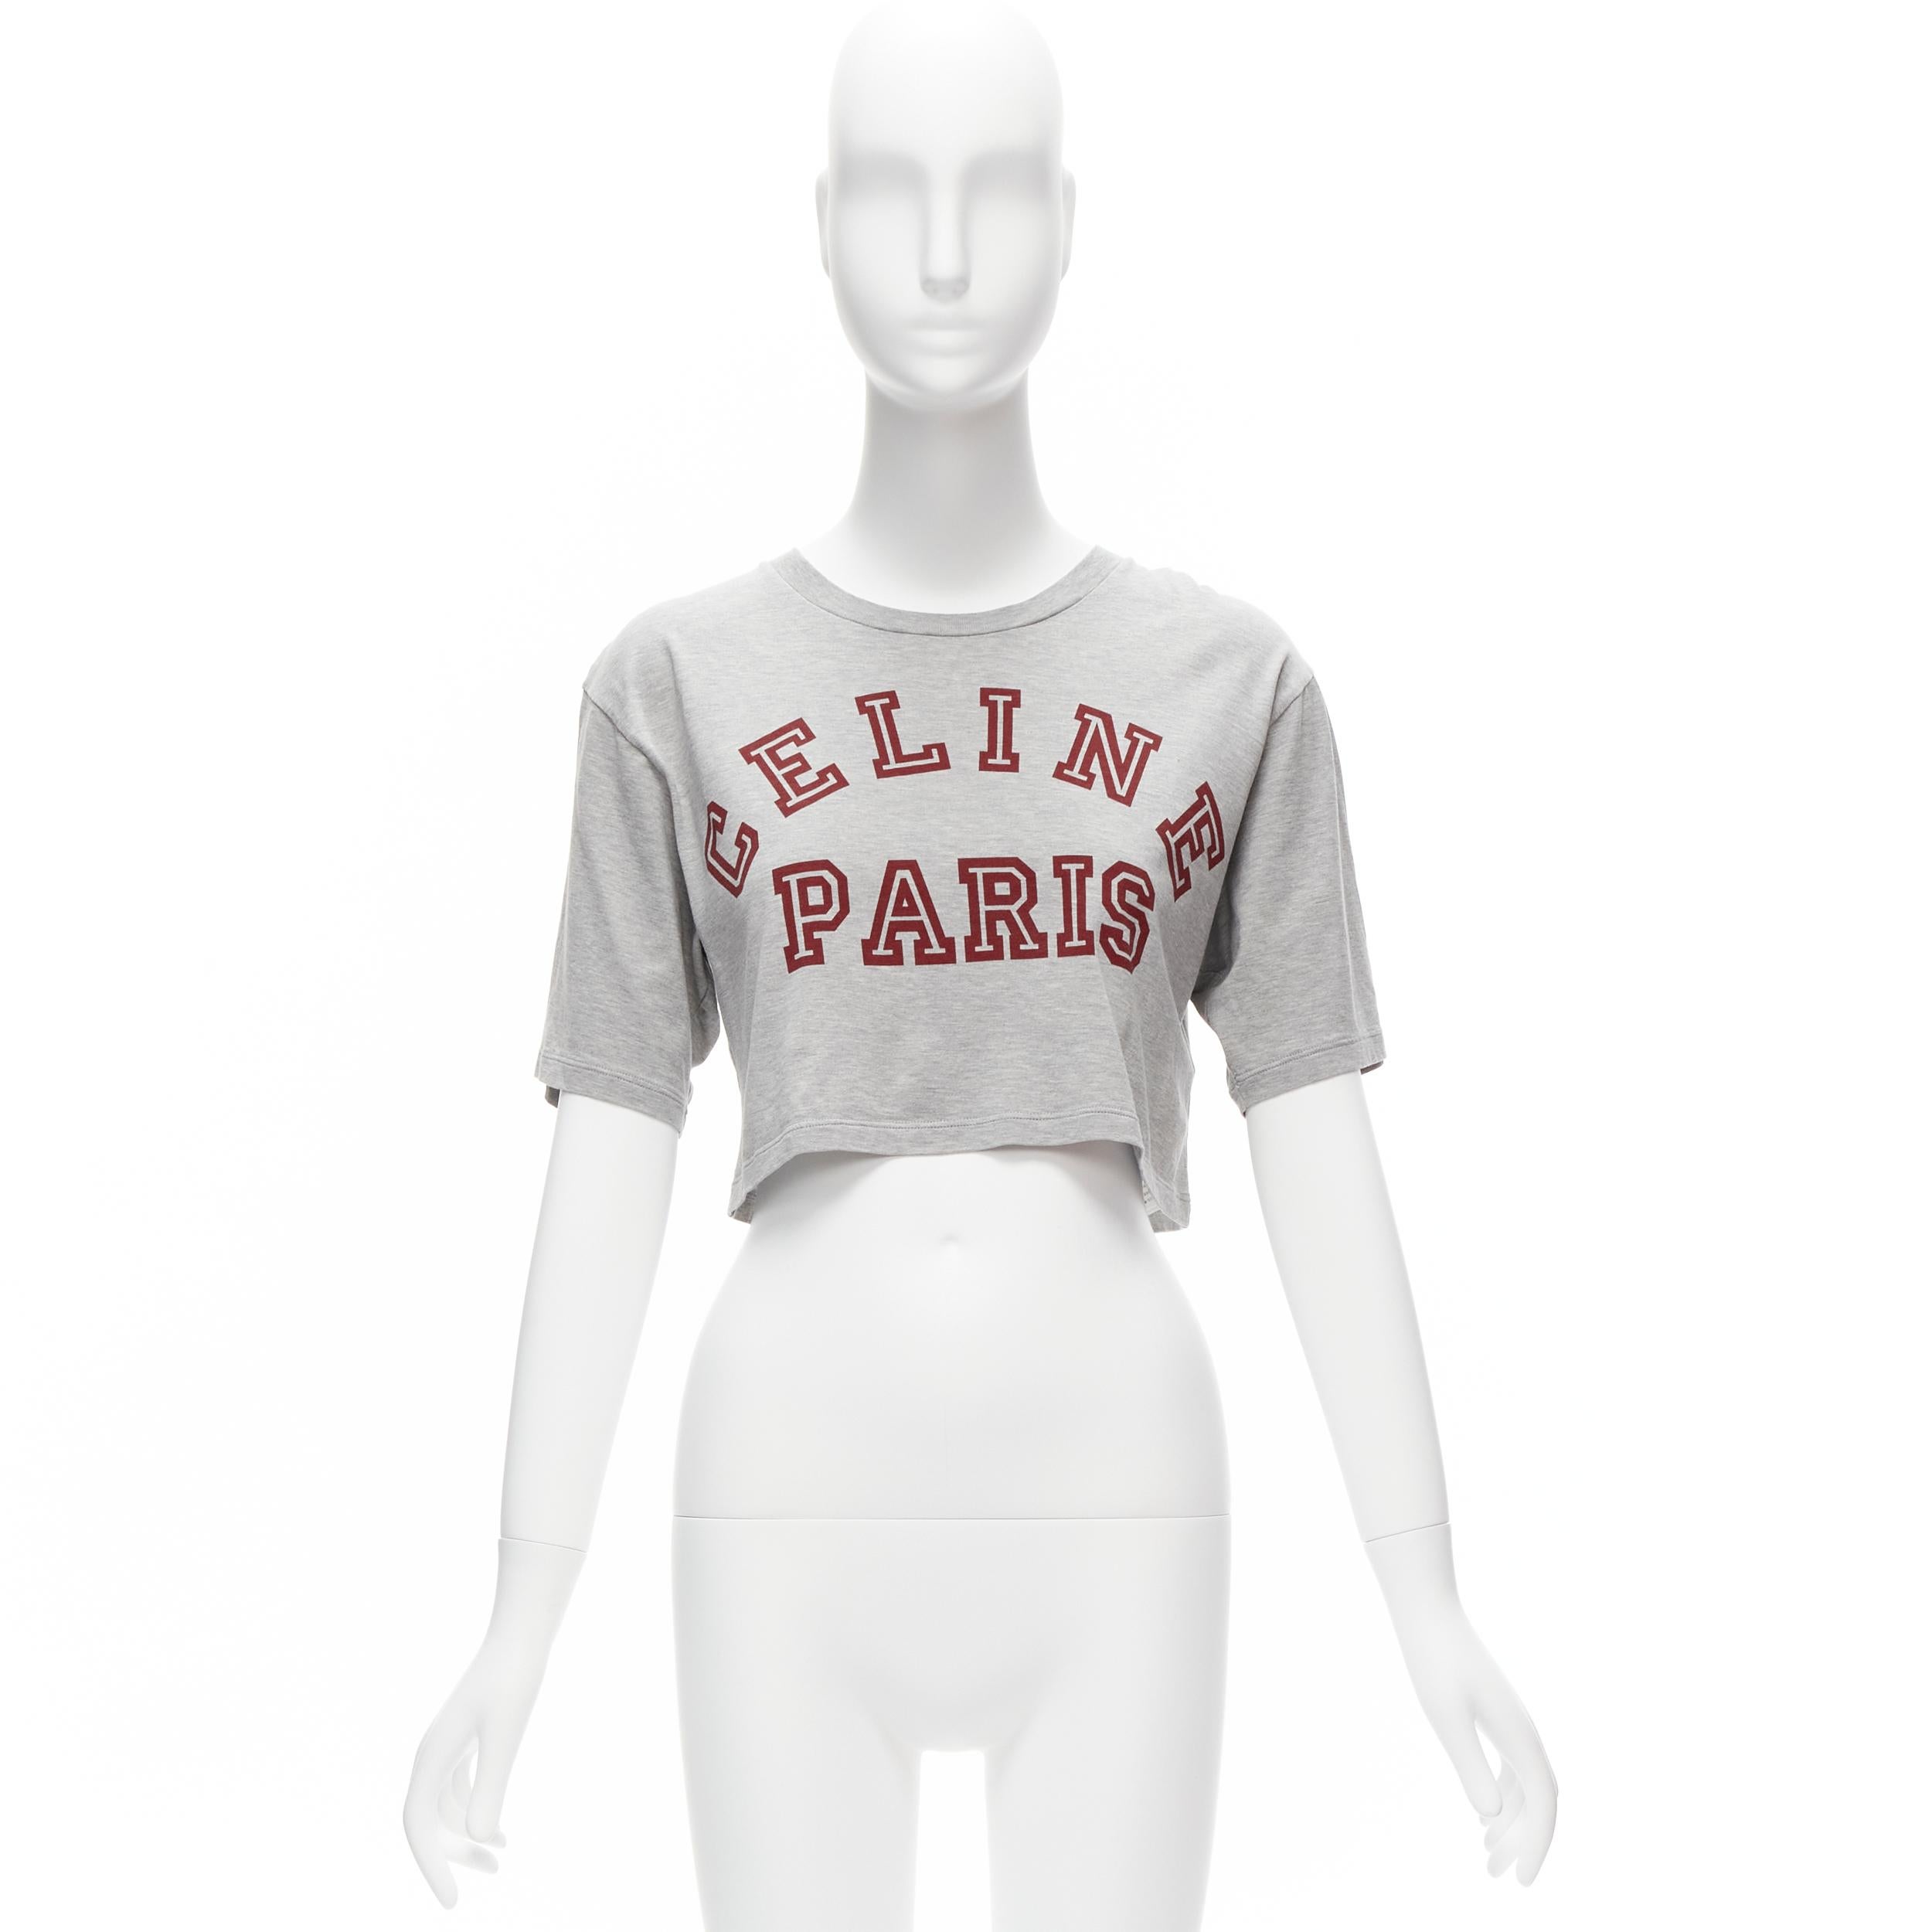 CELINE PARIS red logo grey cotton crew neck cropped tshirt XS For Sale 5